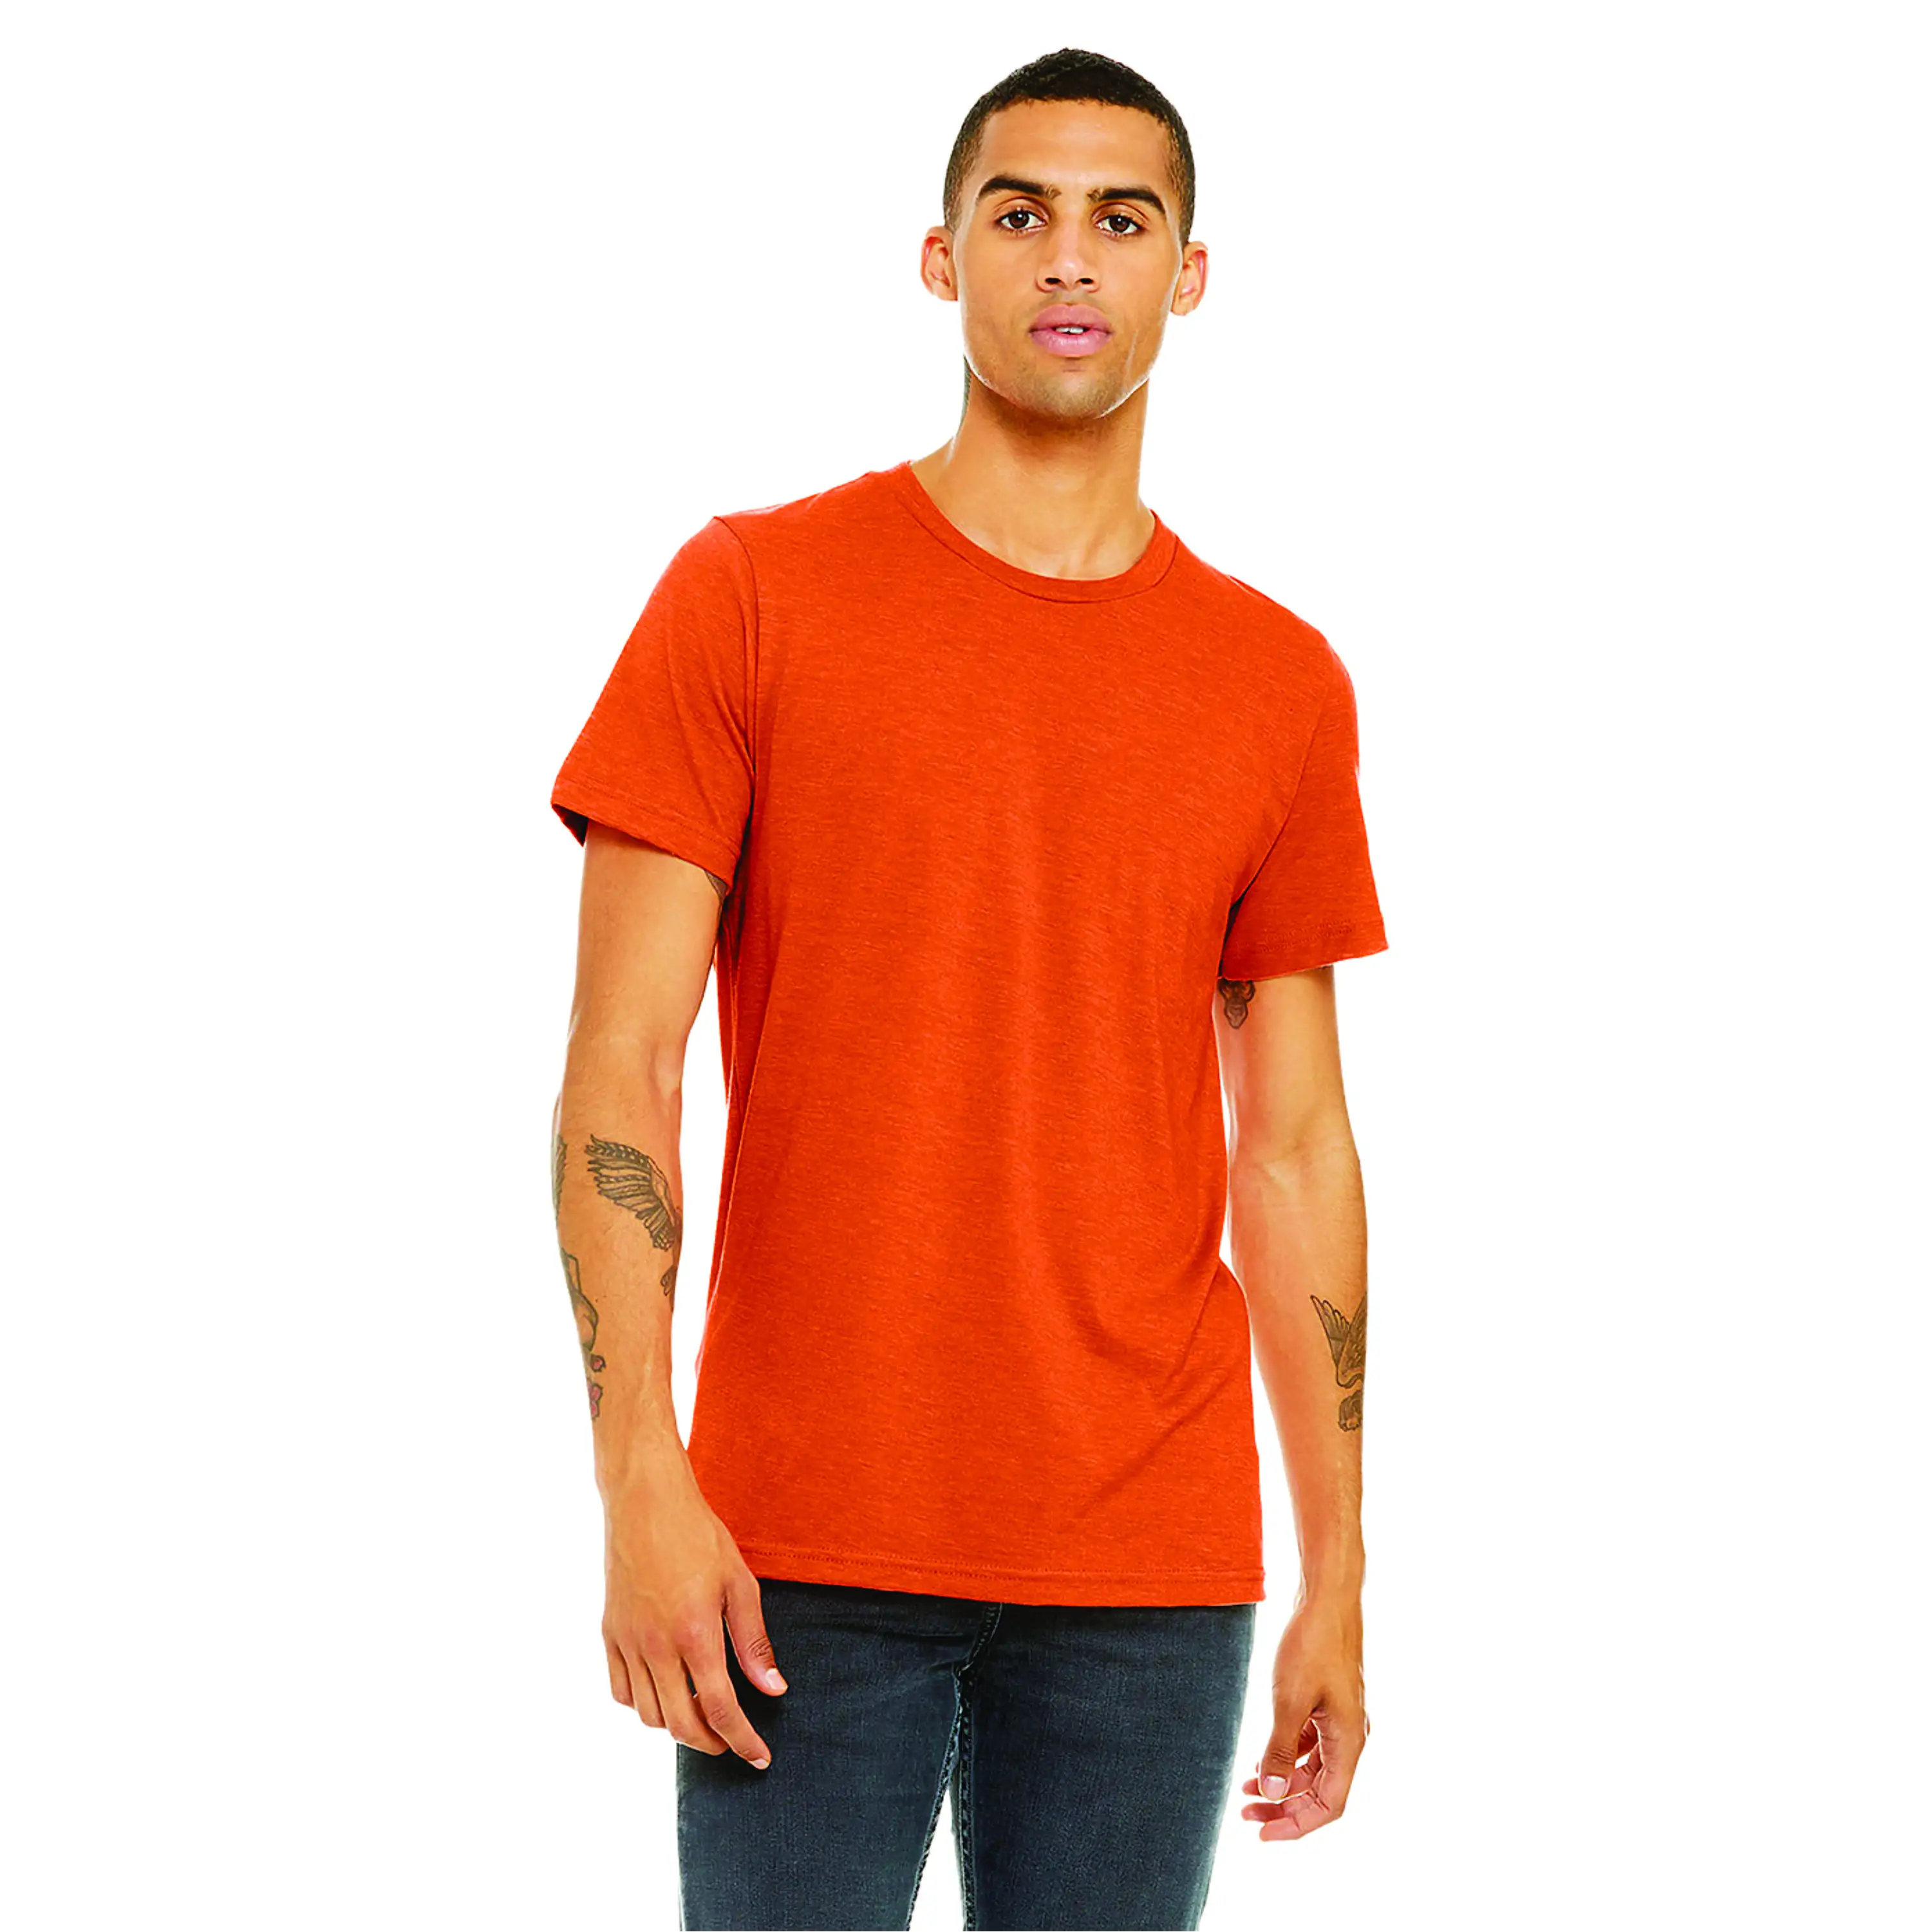 Airlume-Camiseta de manga corta Unisex, Camiseta de algodón peinado y anillo, 52% poliéster, 32, 48% oz, brezo naranja, CVC, 4,2